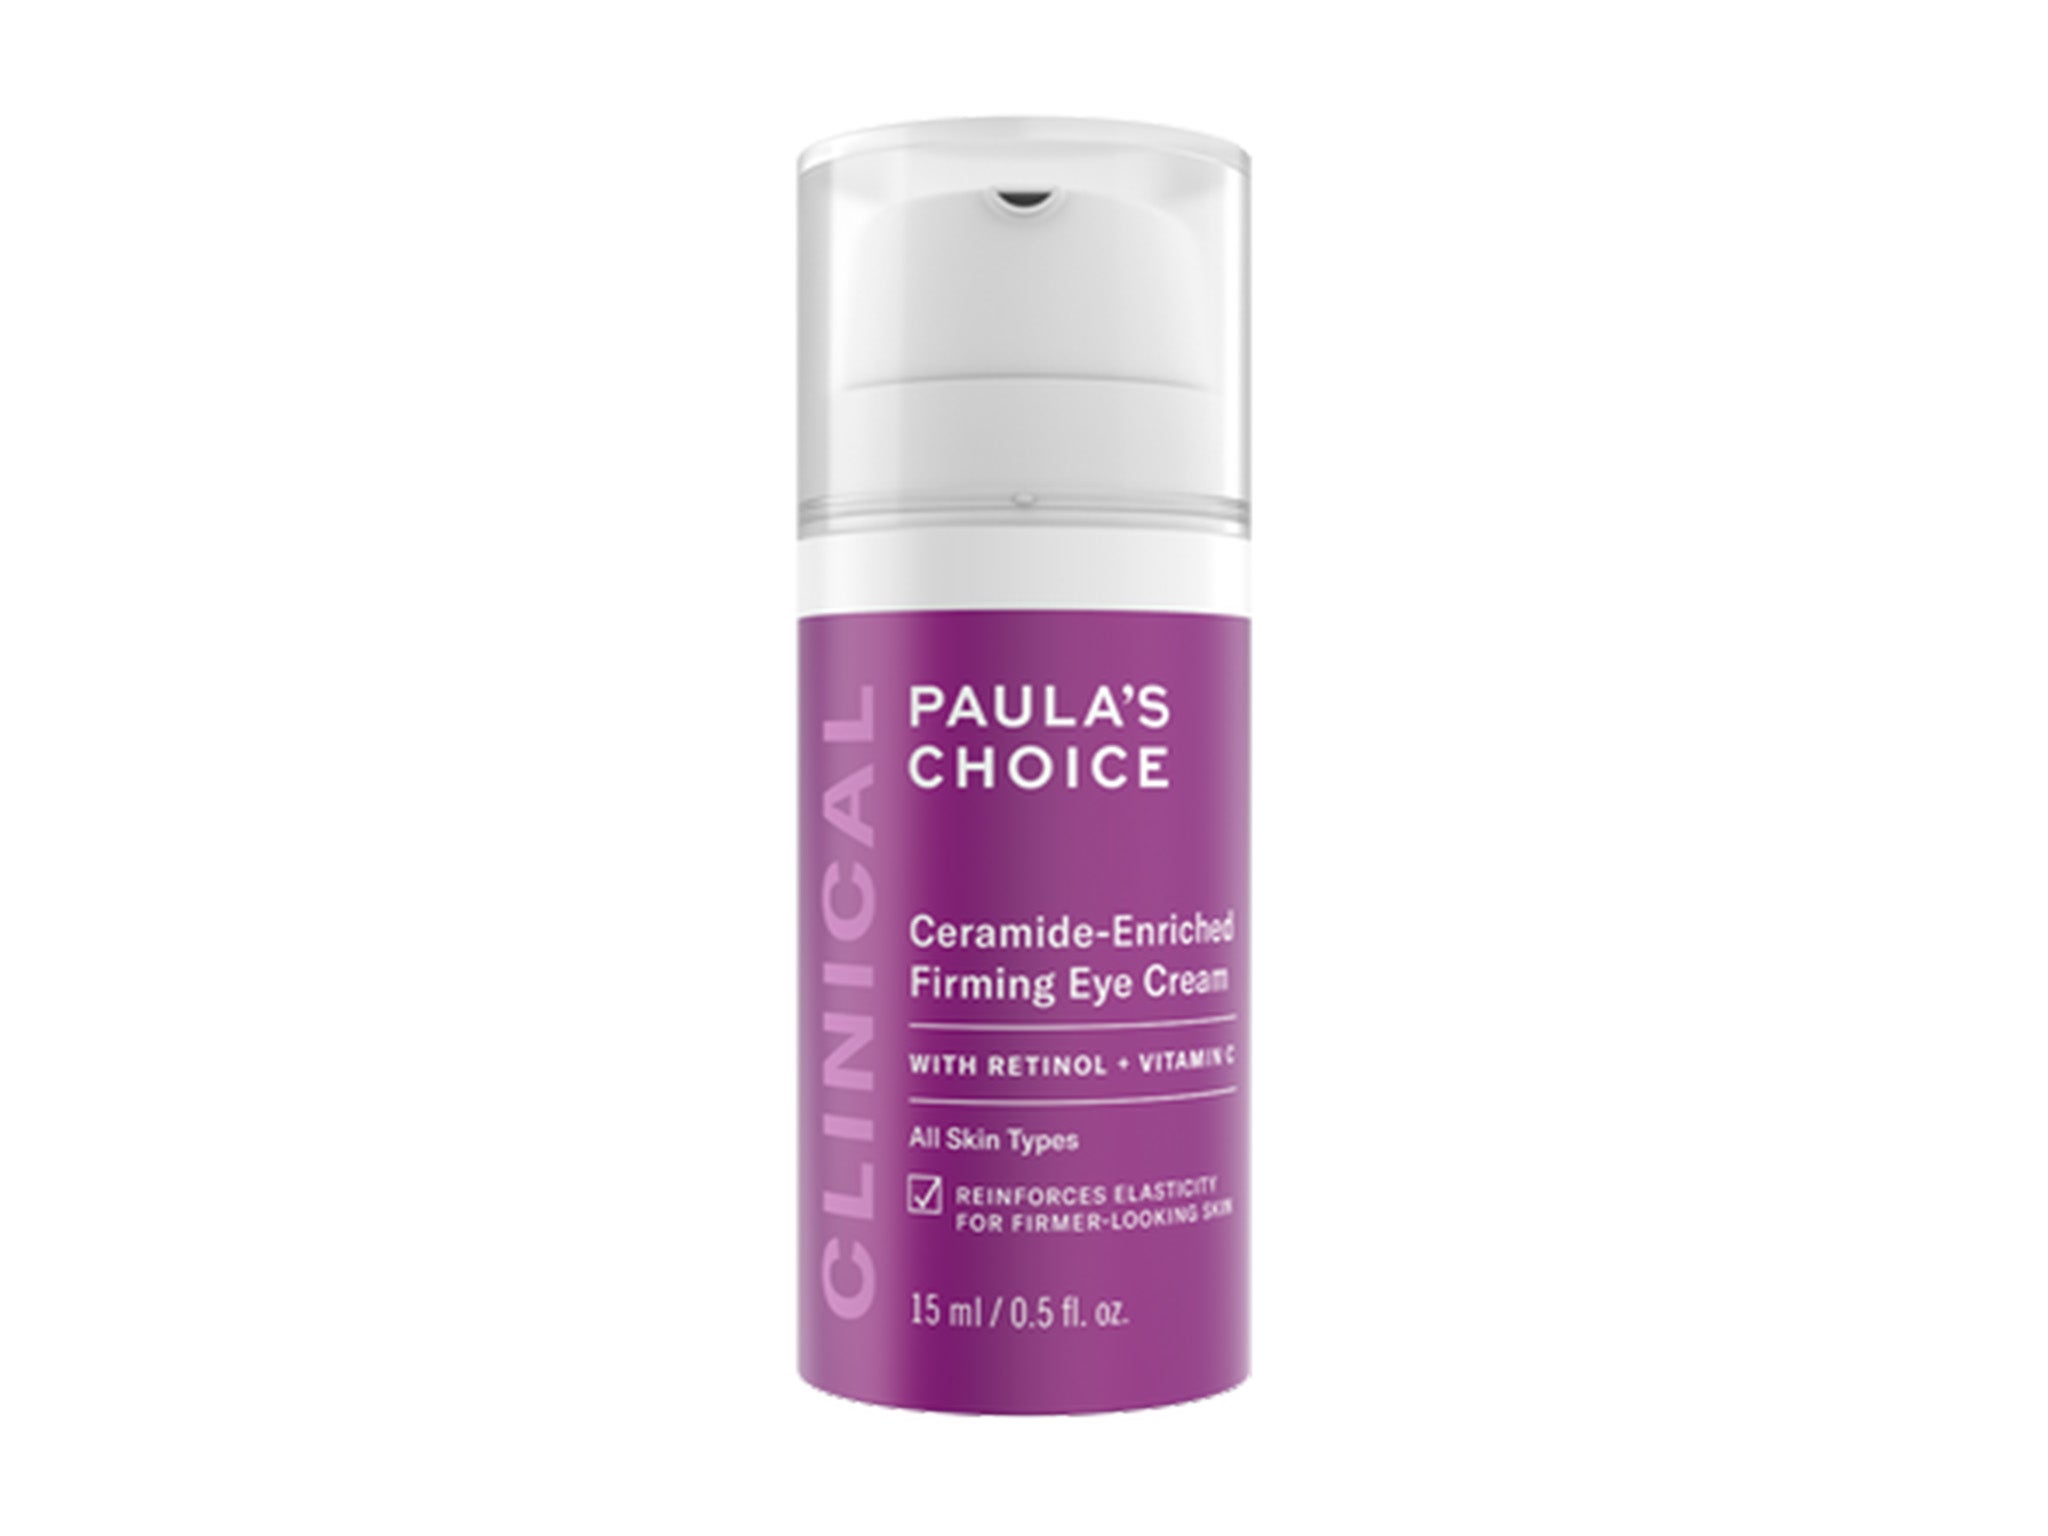 Paula’s Choice clinical ceramide-enriched firming eye cream